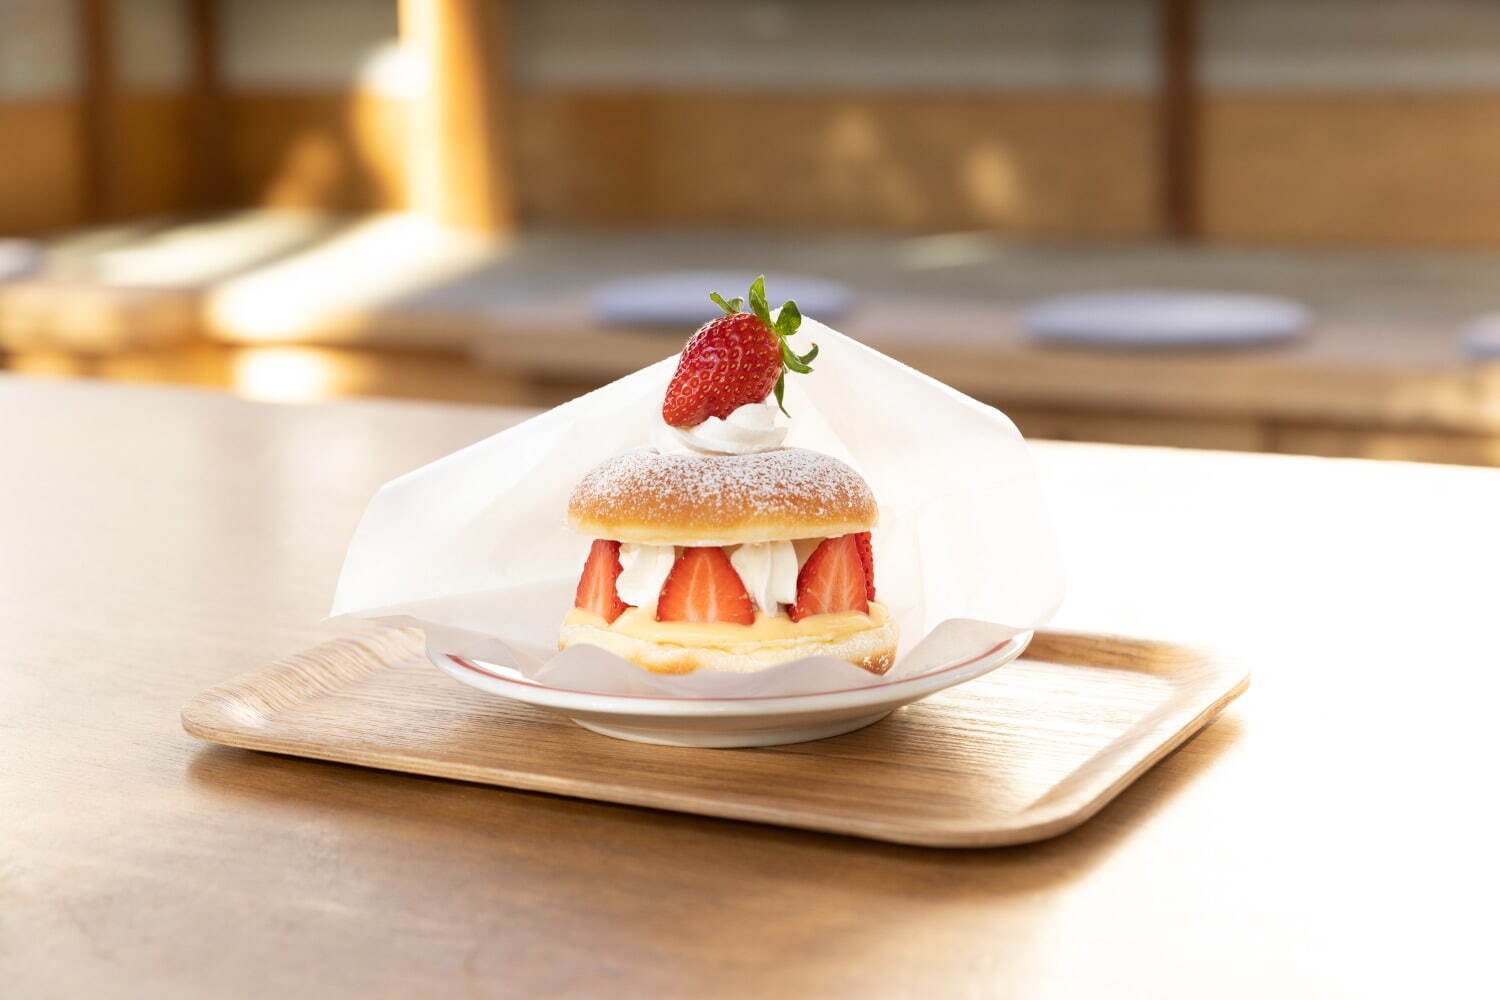 HIGUMA Doughnuts × Coffee Wrights 表参道
佐賀県産 "いちごさん" ドーナッツサンド 850円